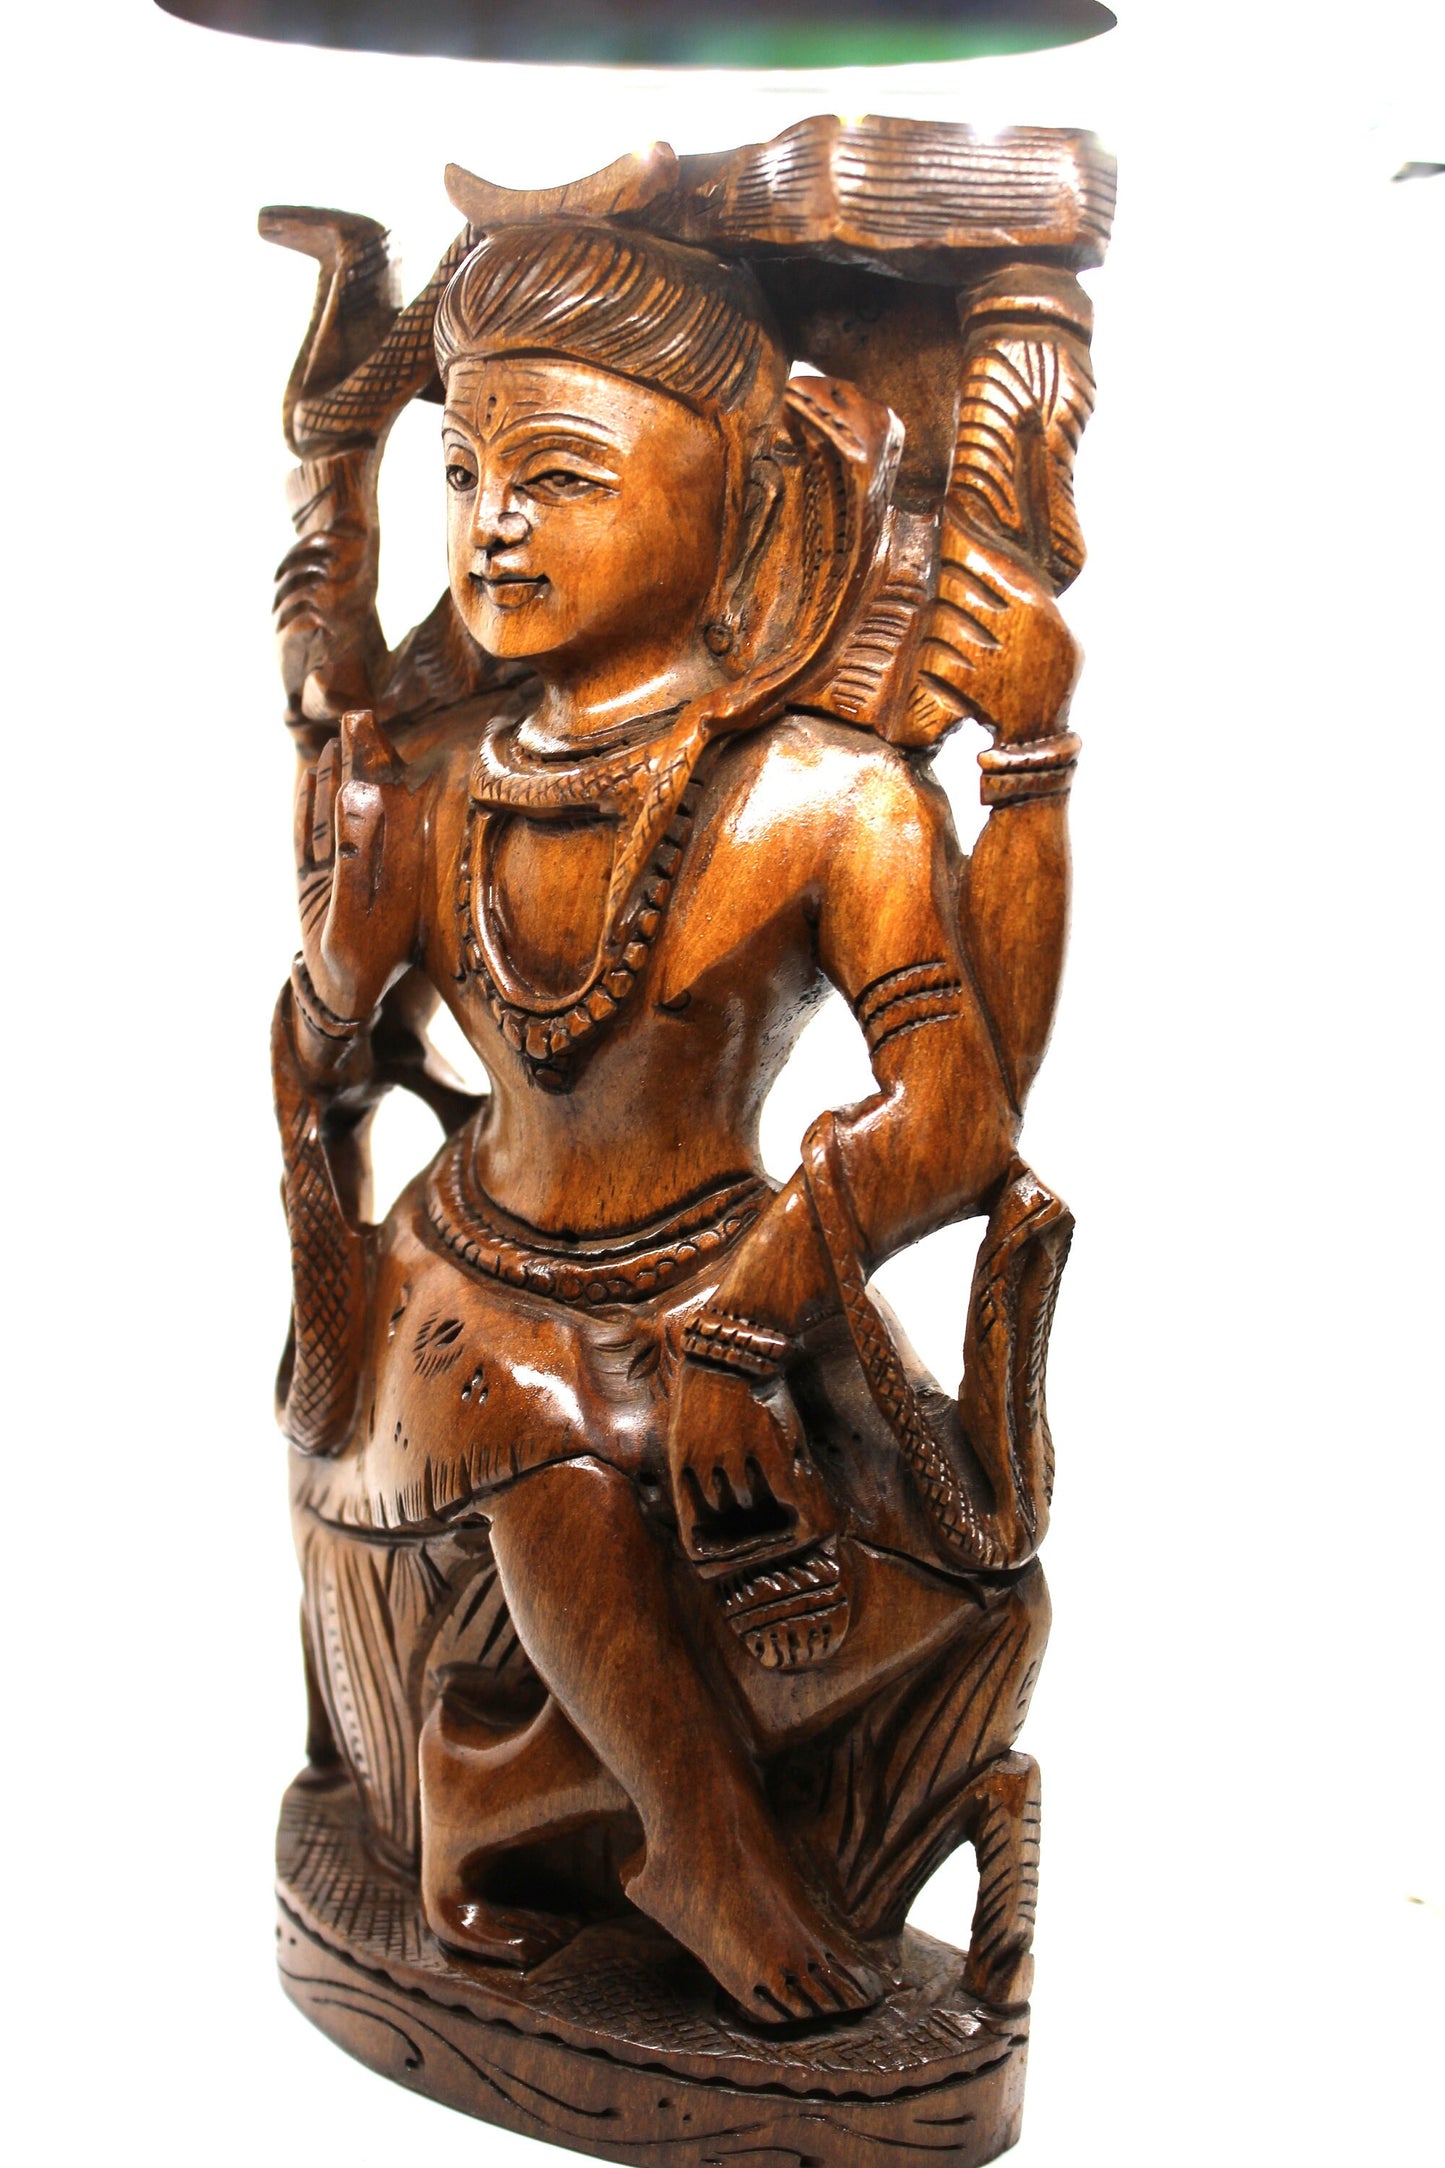 Shiva Statue, Wooden Hand carved Lord Shiv Idol Hindu God Pooja Prayer Rare, 8" Detailed Statues, Shiva God Meditation Decor, Pray, Yoga